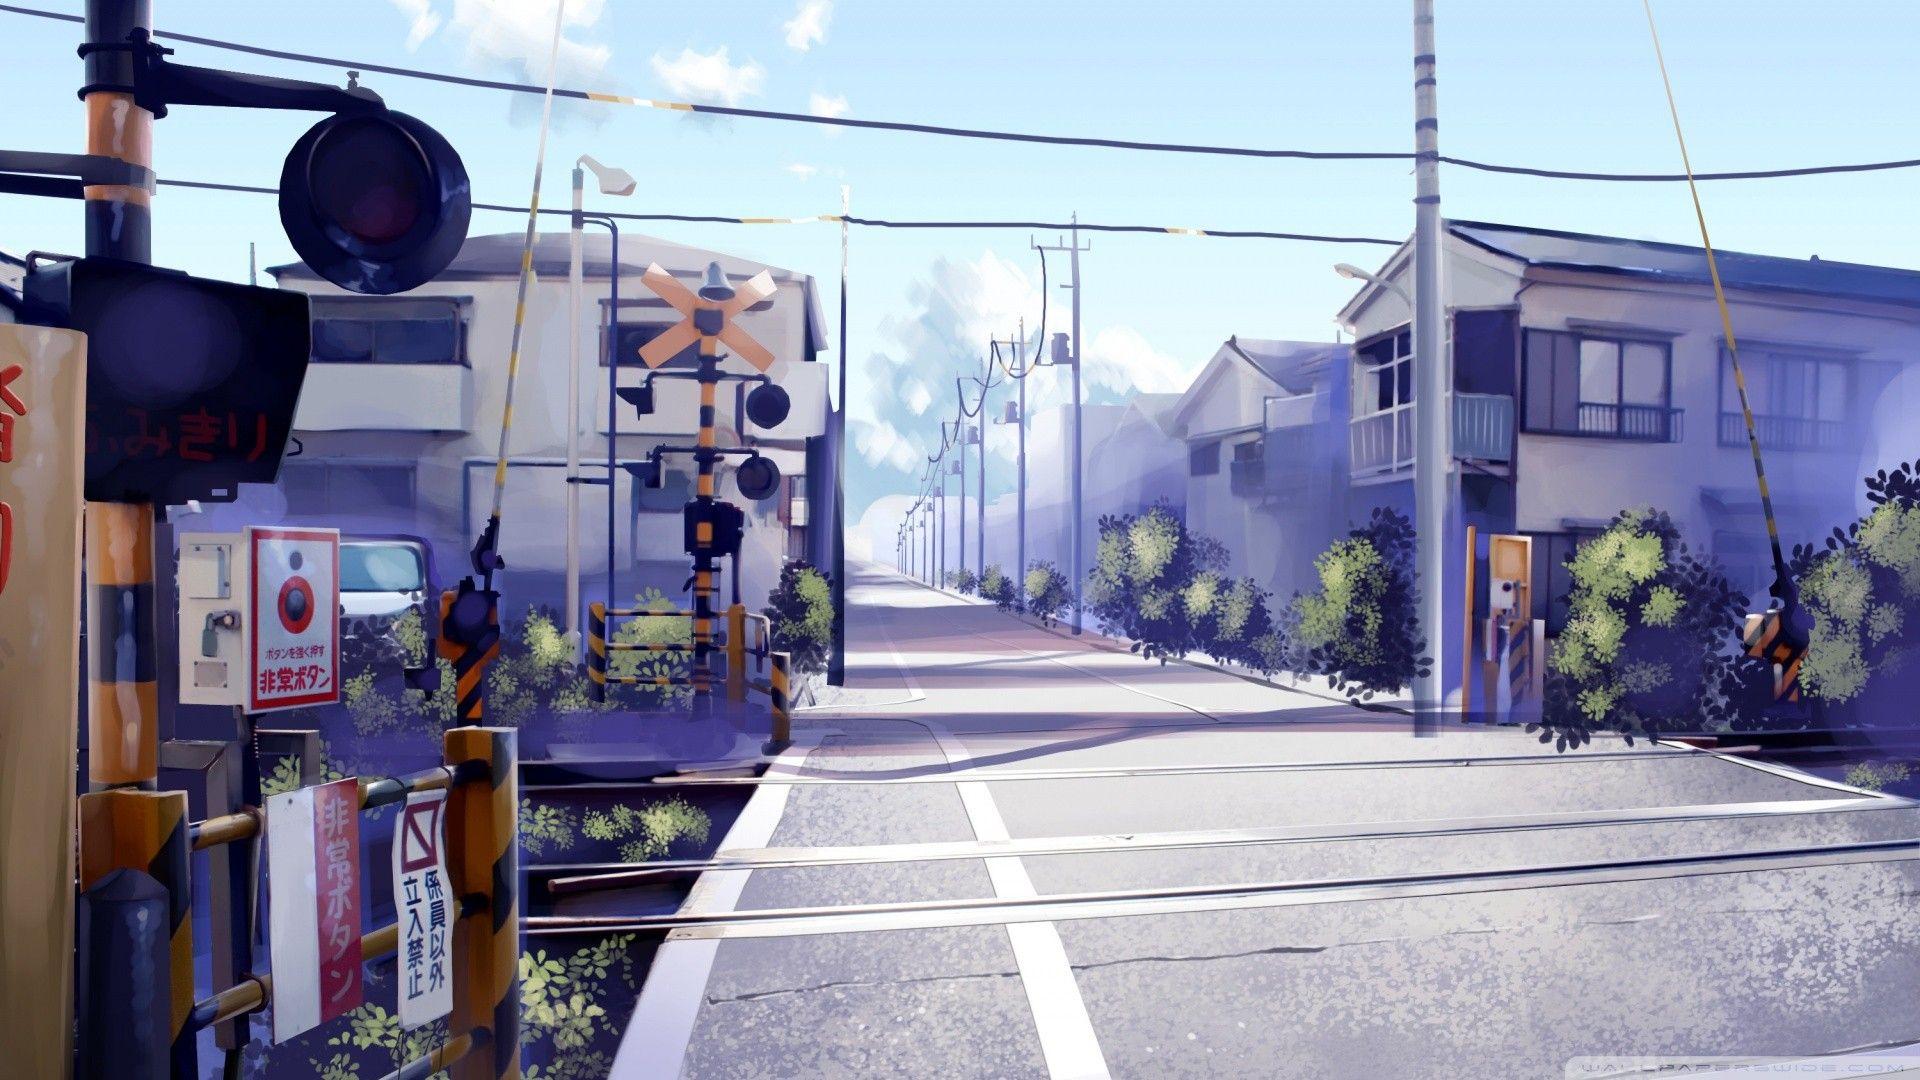 Anime Scenery HD Wallpaper. Anime scenery, Anime city